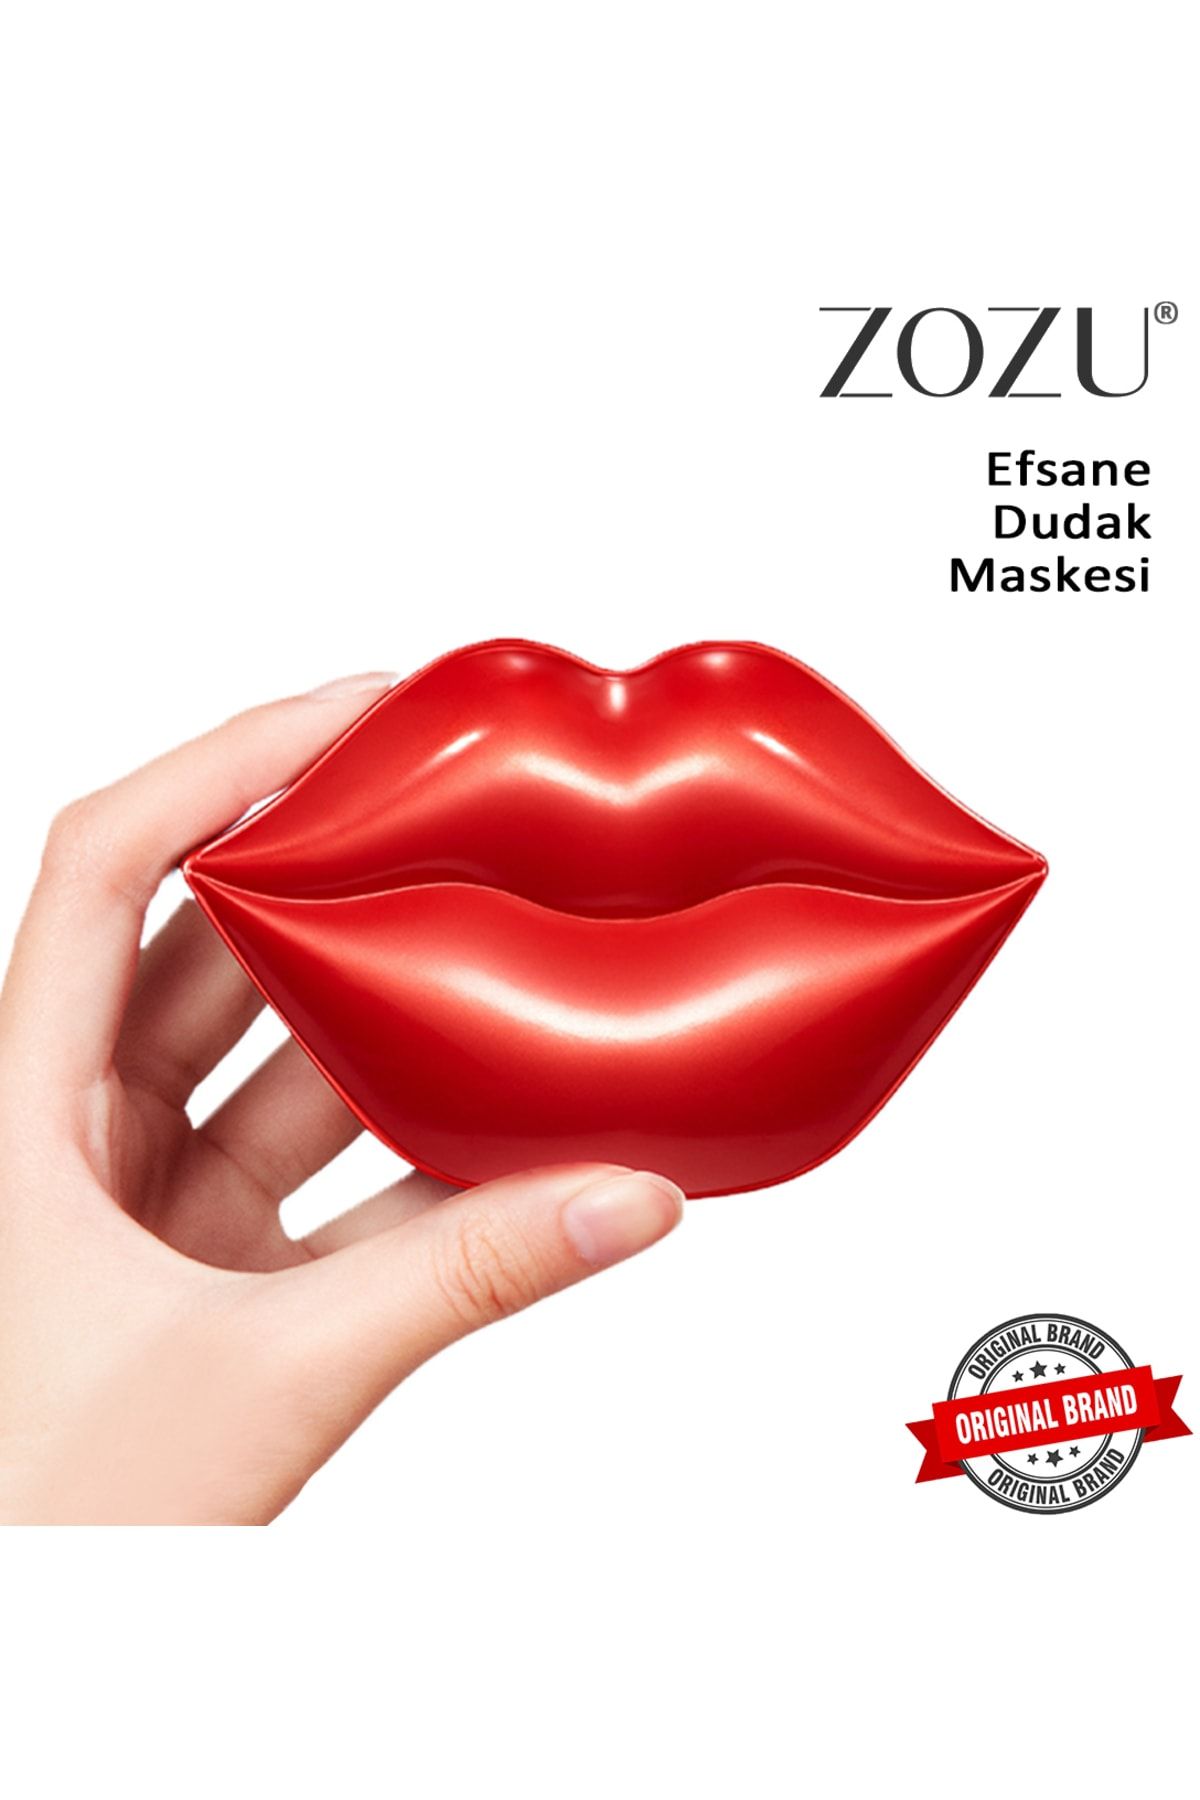 Zozu ® Hollywood Dudak Bakım Maske Seti 20 Adet